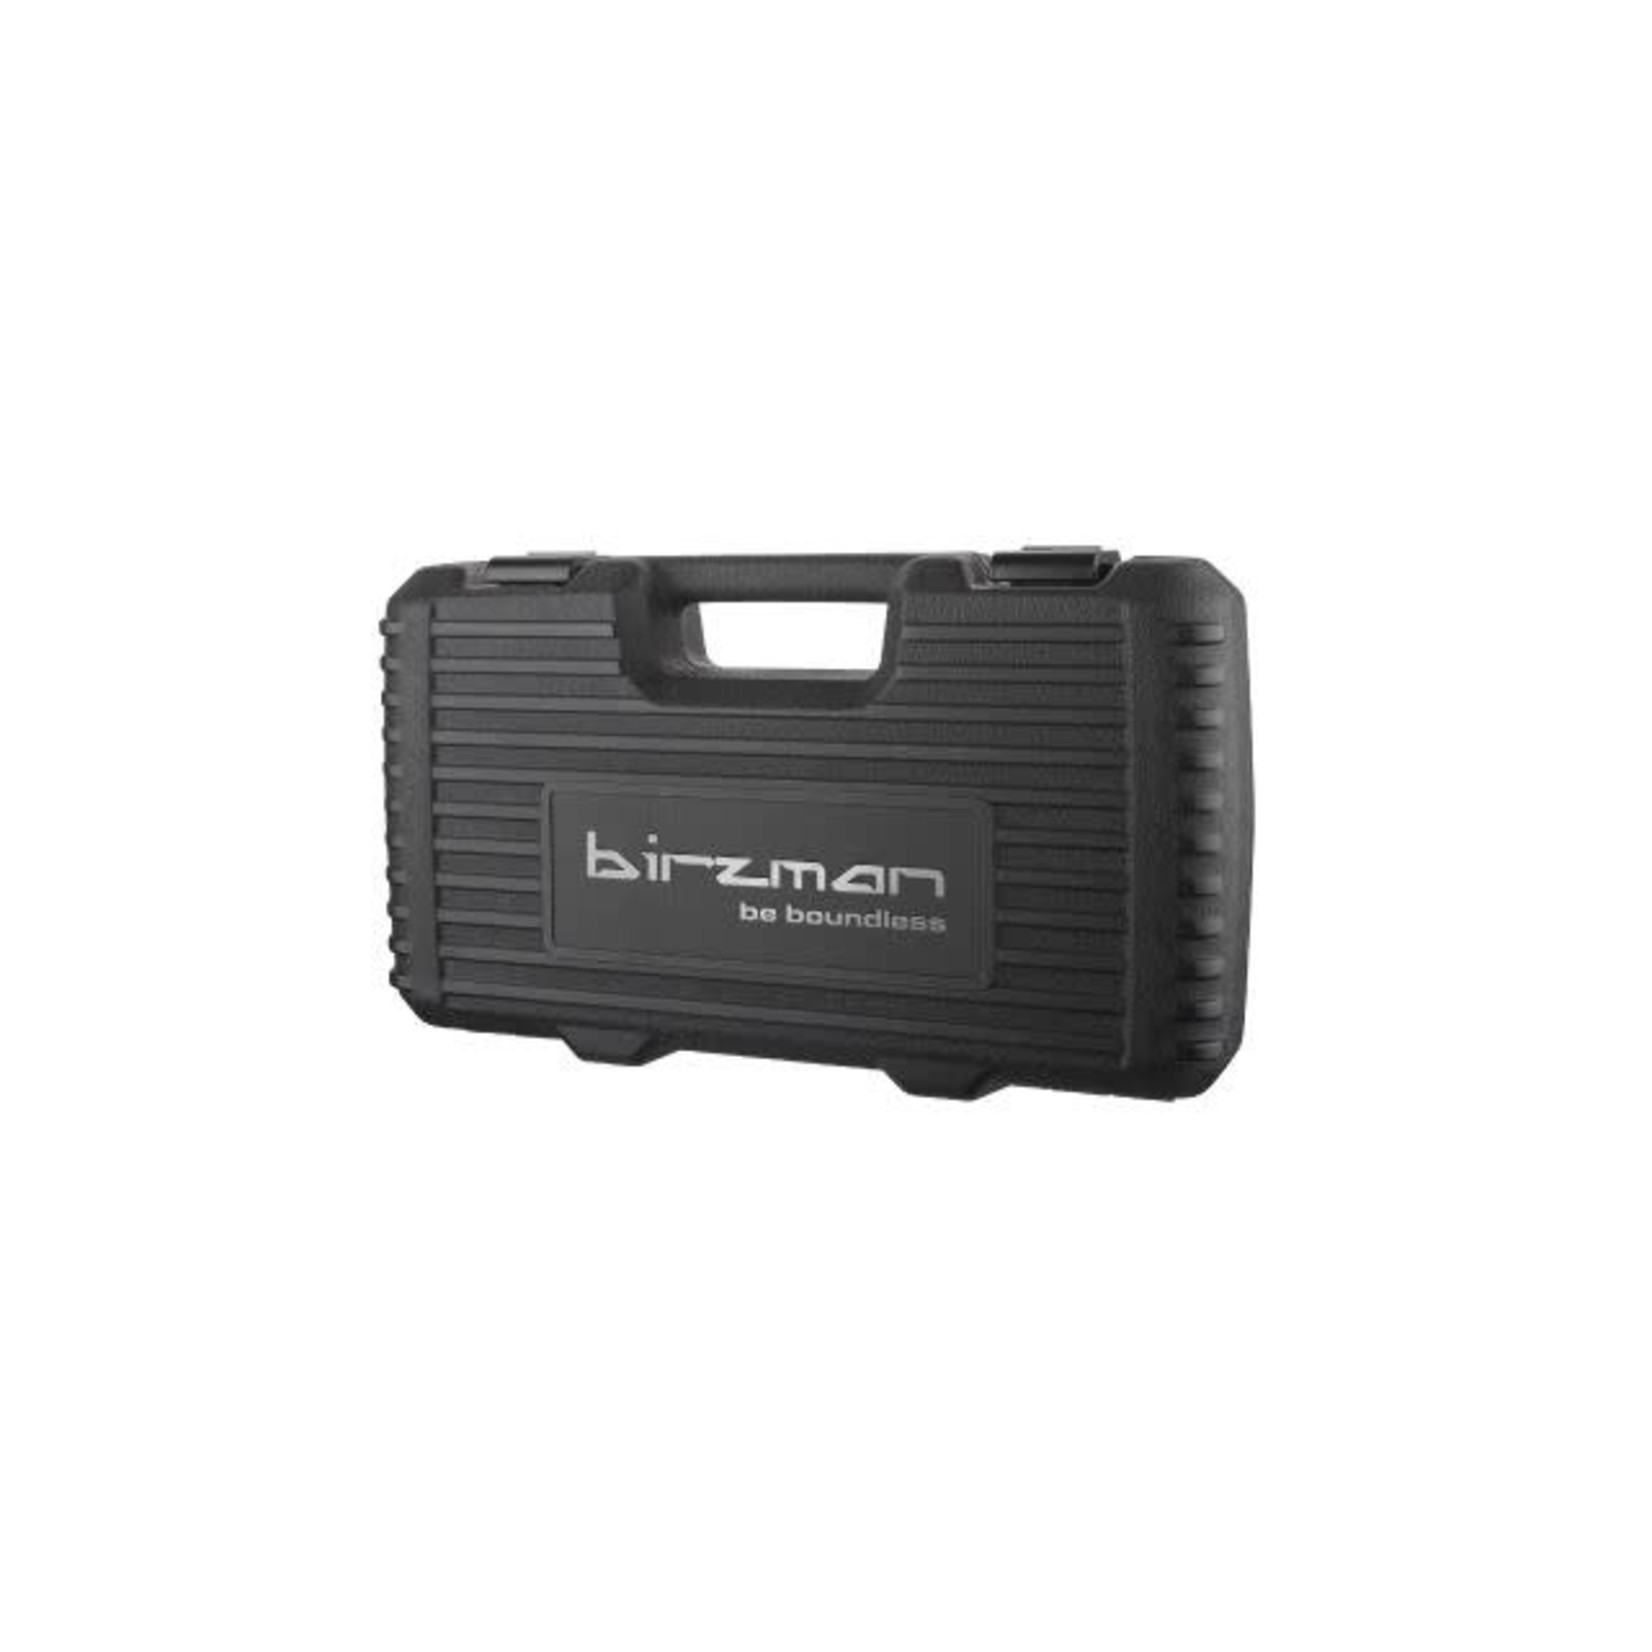 Birzman Birzman Essential SRAM Shimano BB Adaptors Tool Box TL-FC24 & TL-FC25 - 8mm